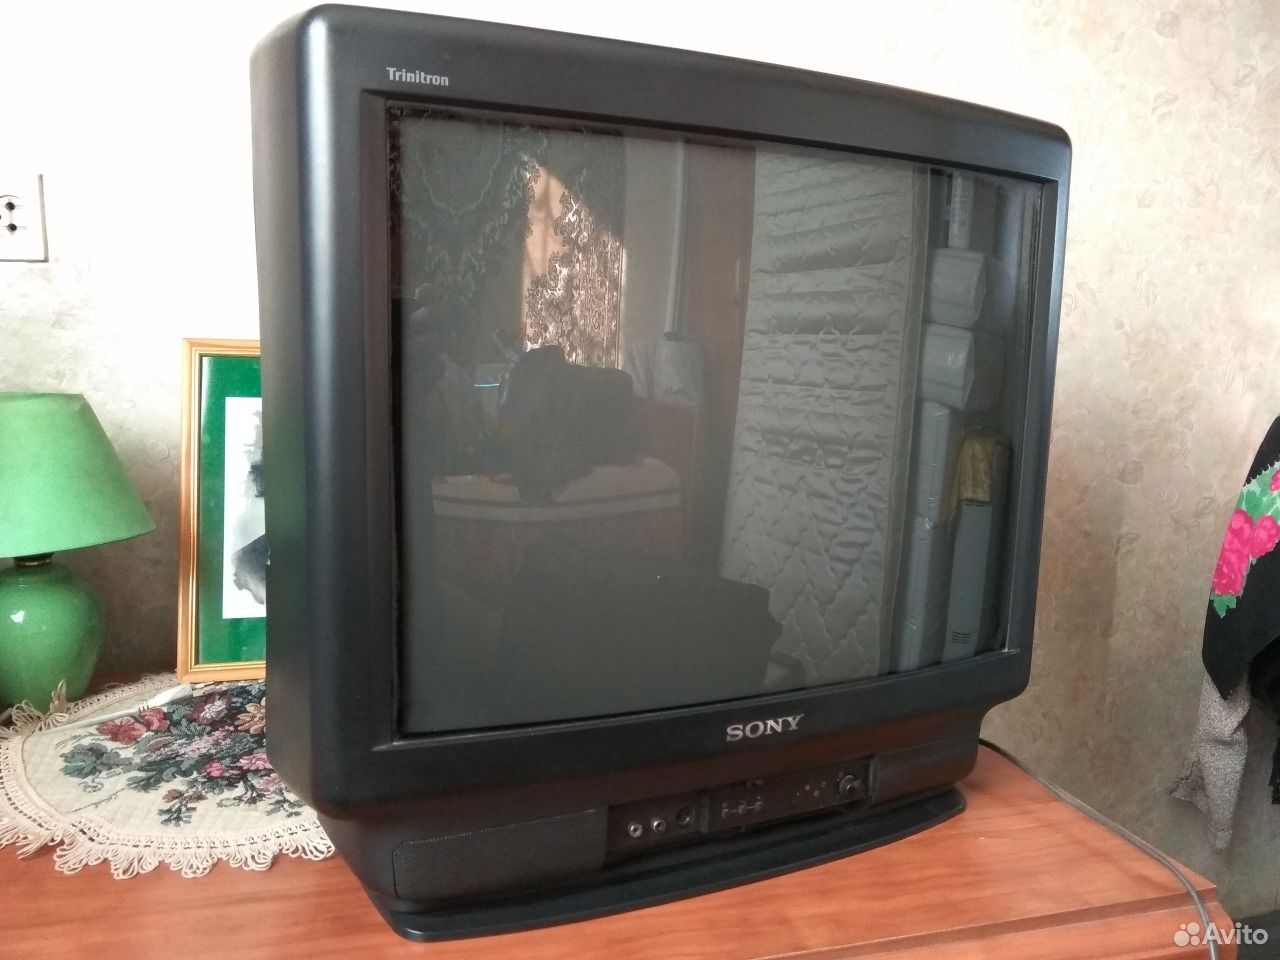 Телевизор сони тринитрон 90-х